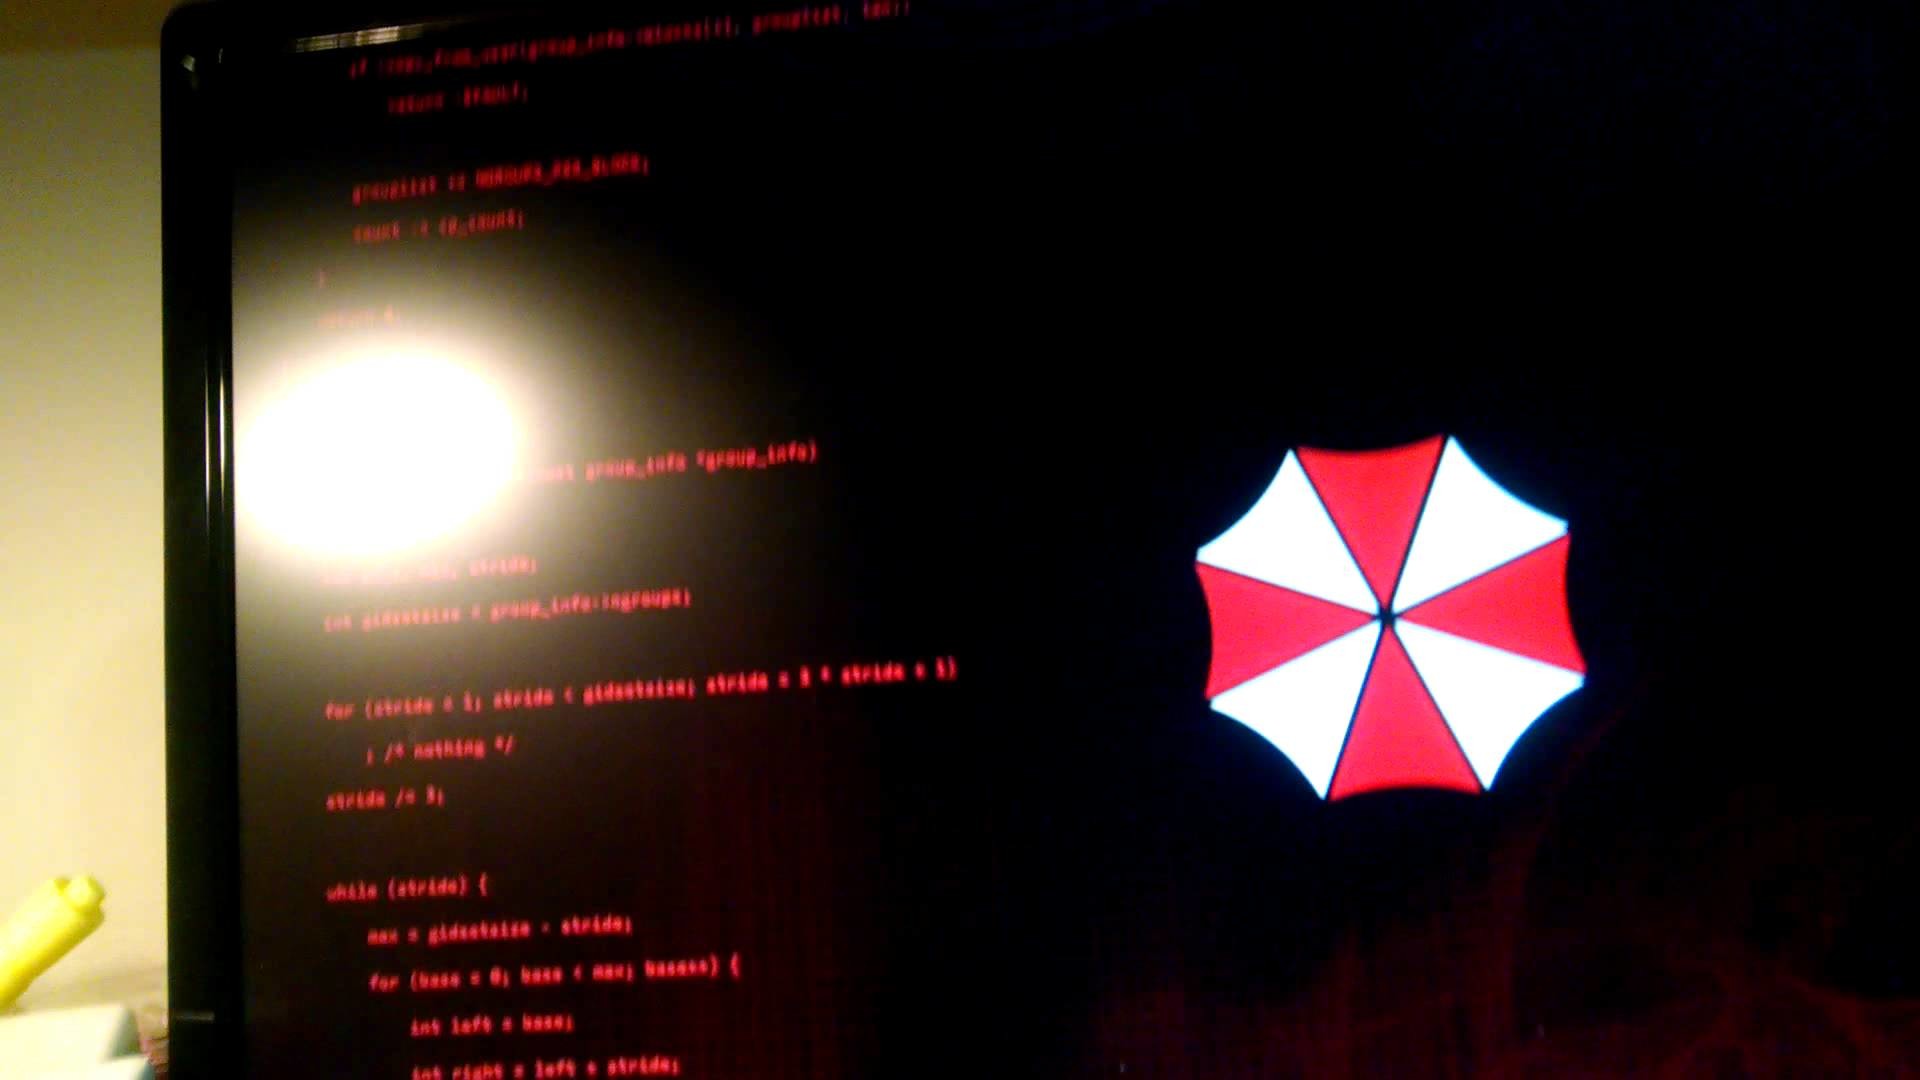 Hacking the Umbrella Corp.